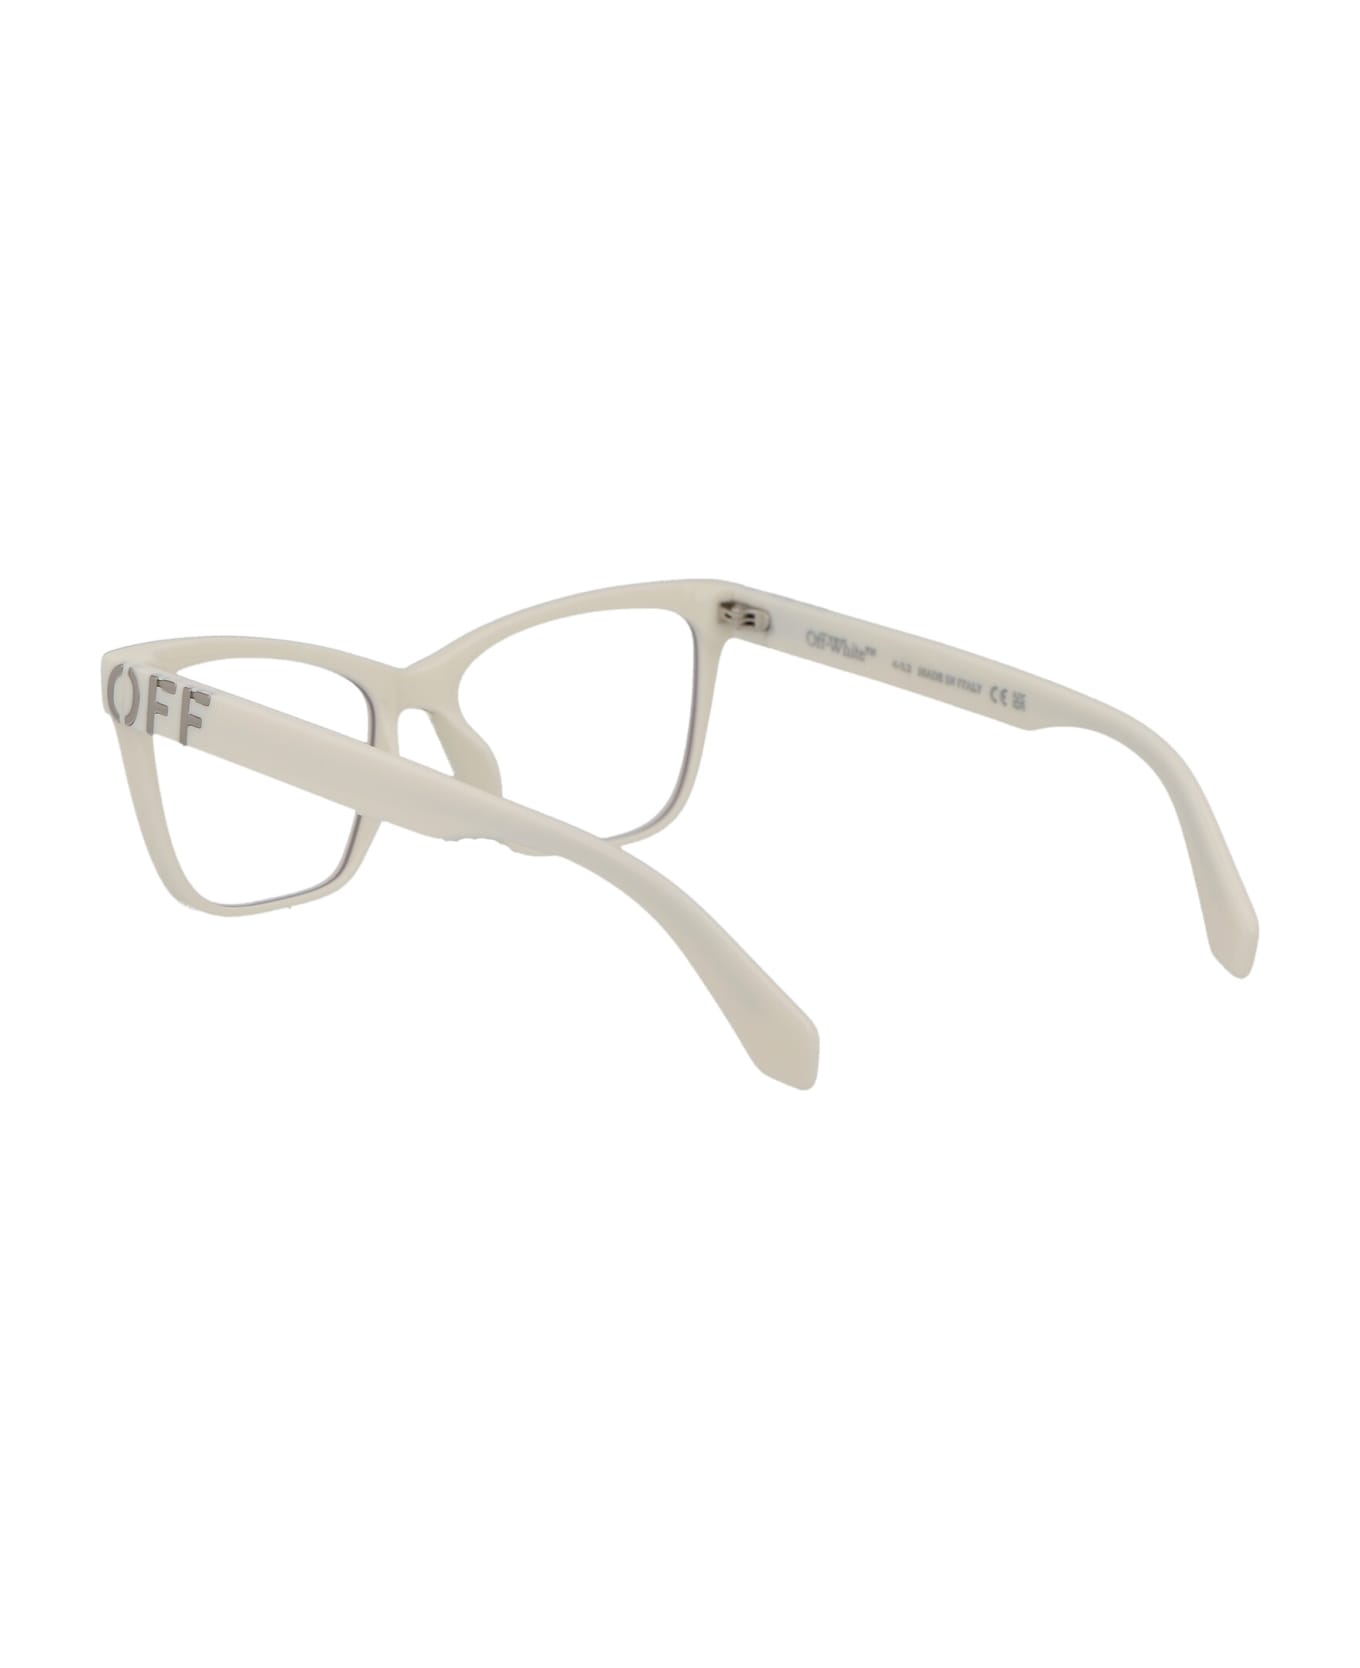 Off-White Optical Style 67 Glasses - 0100 WHITE